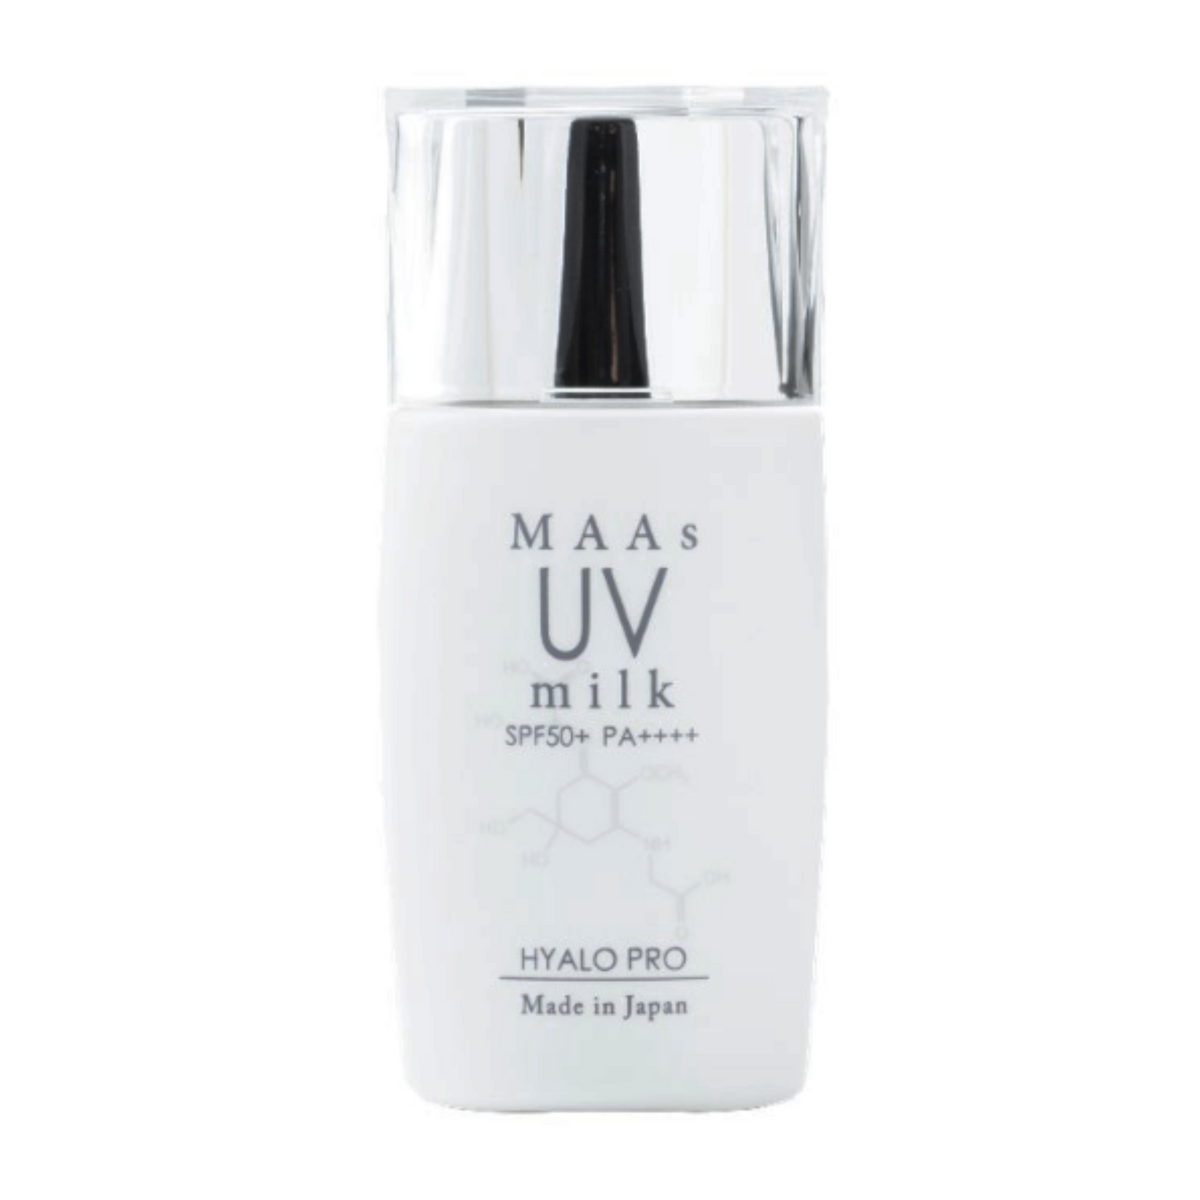 MAAs Hyalo Pro Face/Body UV Milk/Makeup base (35g)